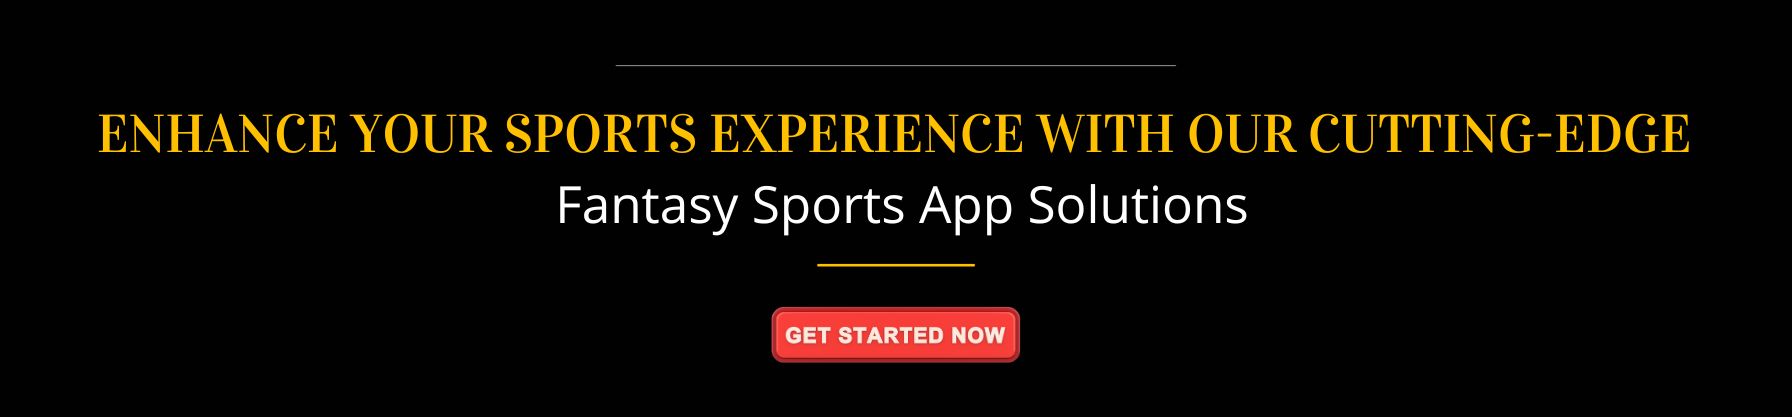 Fantasy Sports League App Development-CTA